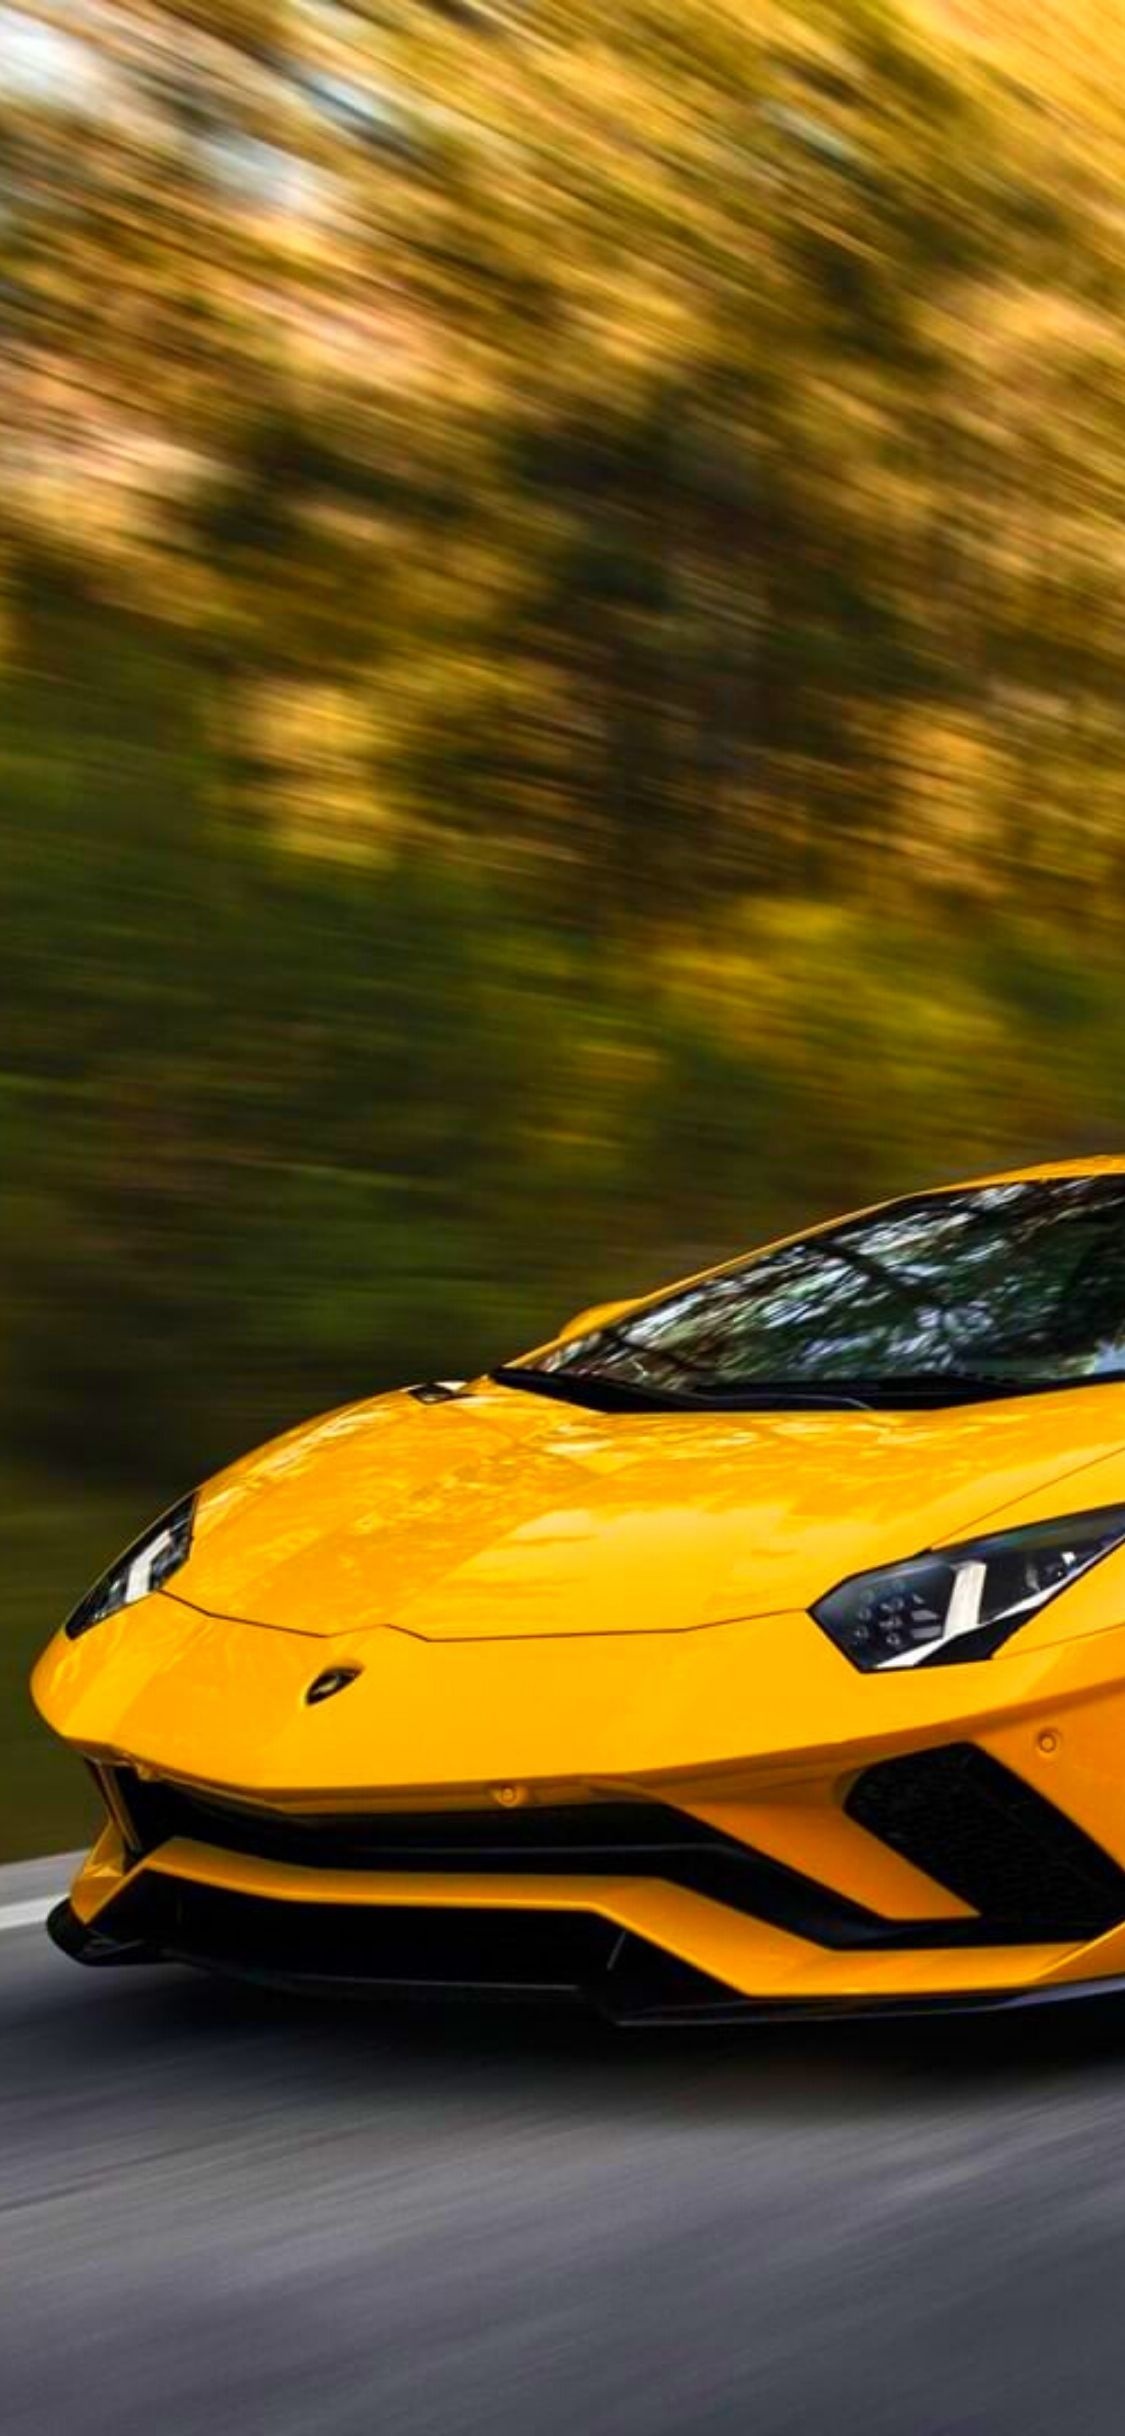 iPhone 11, Aventador wallpapers, Free download, Stunning Lamborghini visuals, 1130x2440 HD Phone